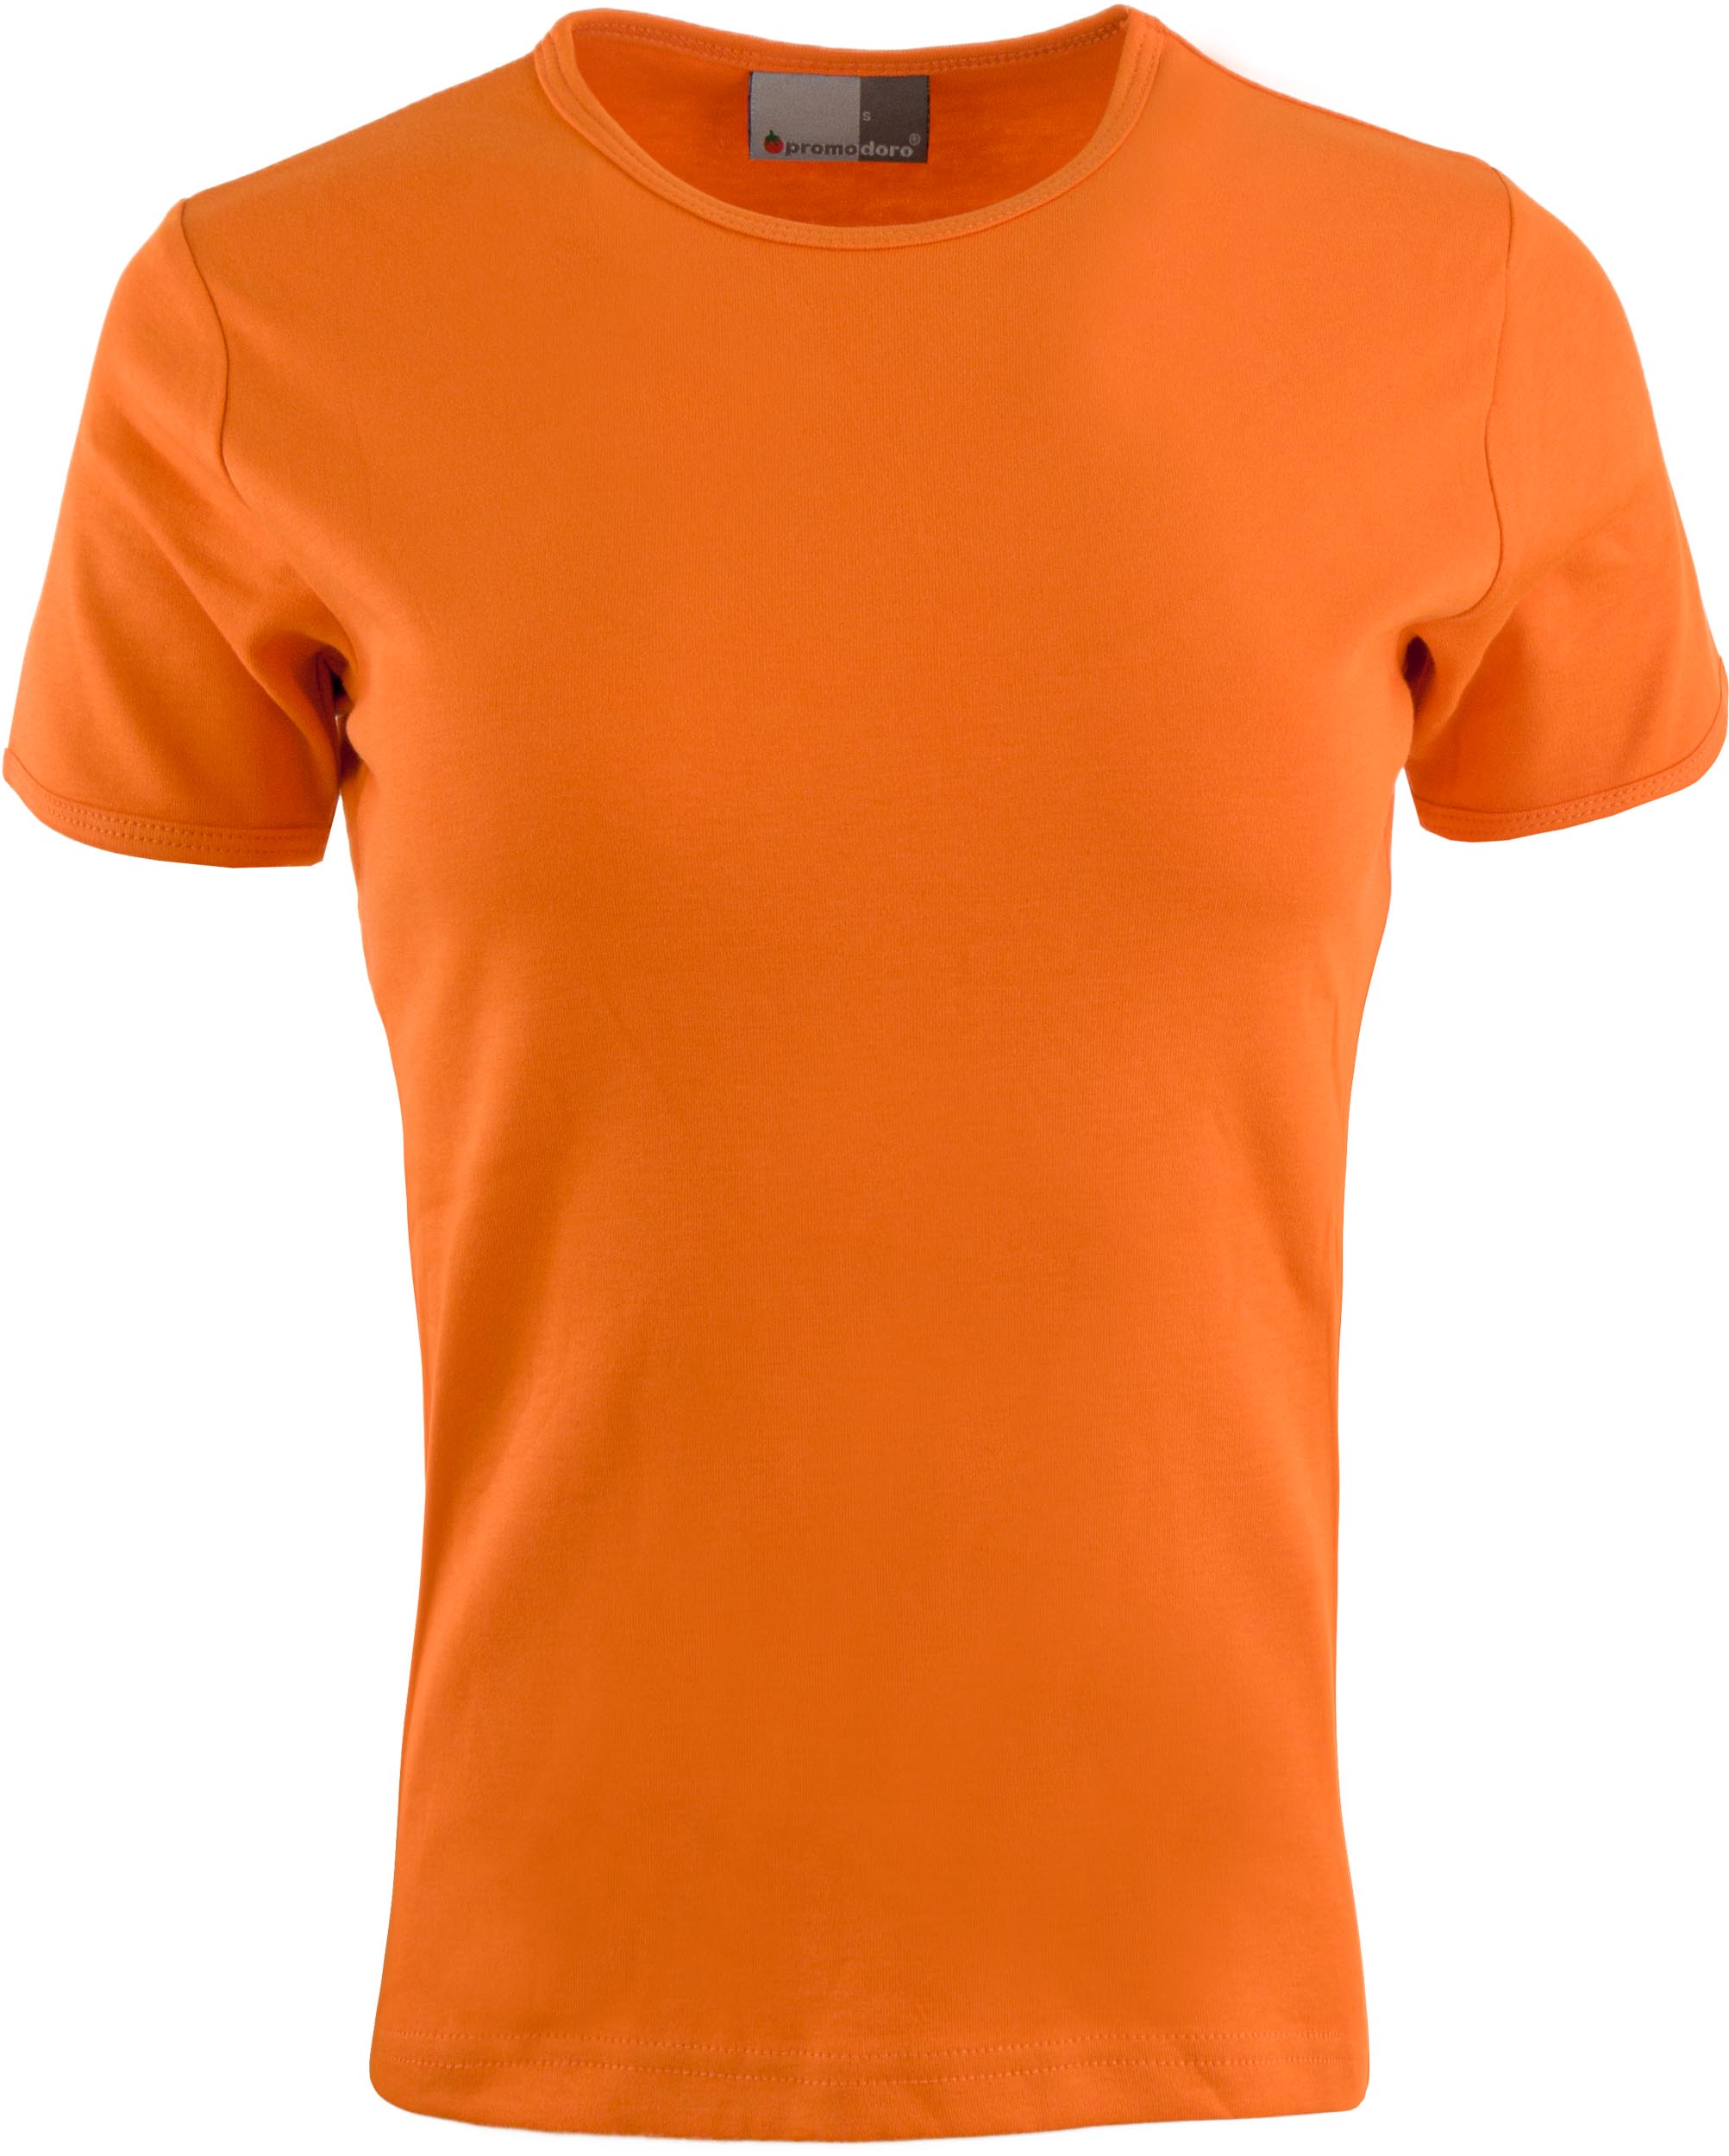 Dámské triko Promodoro Interlock Orange|XXL